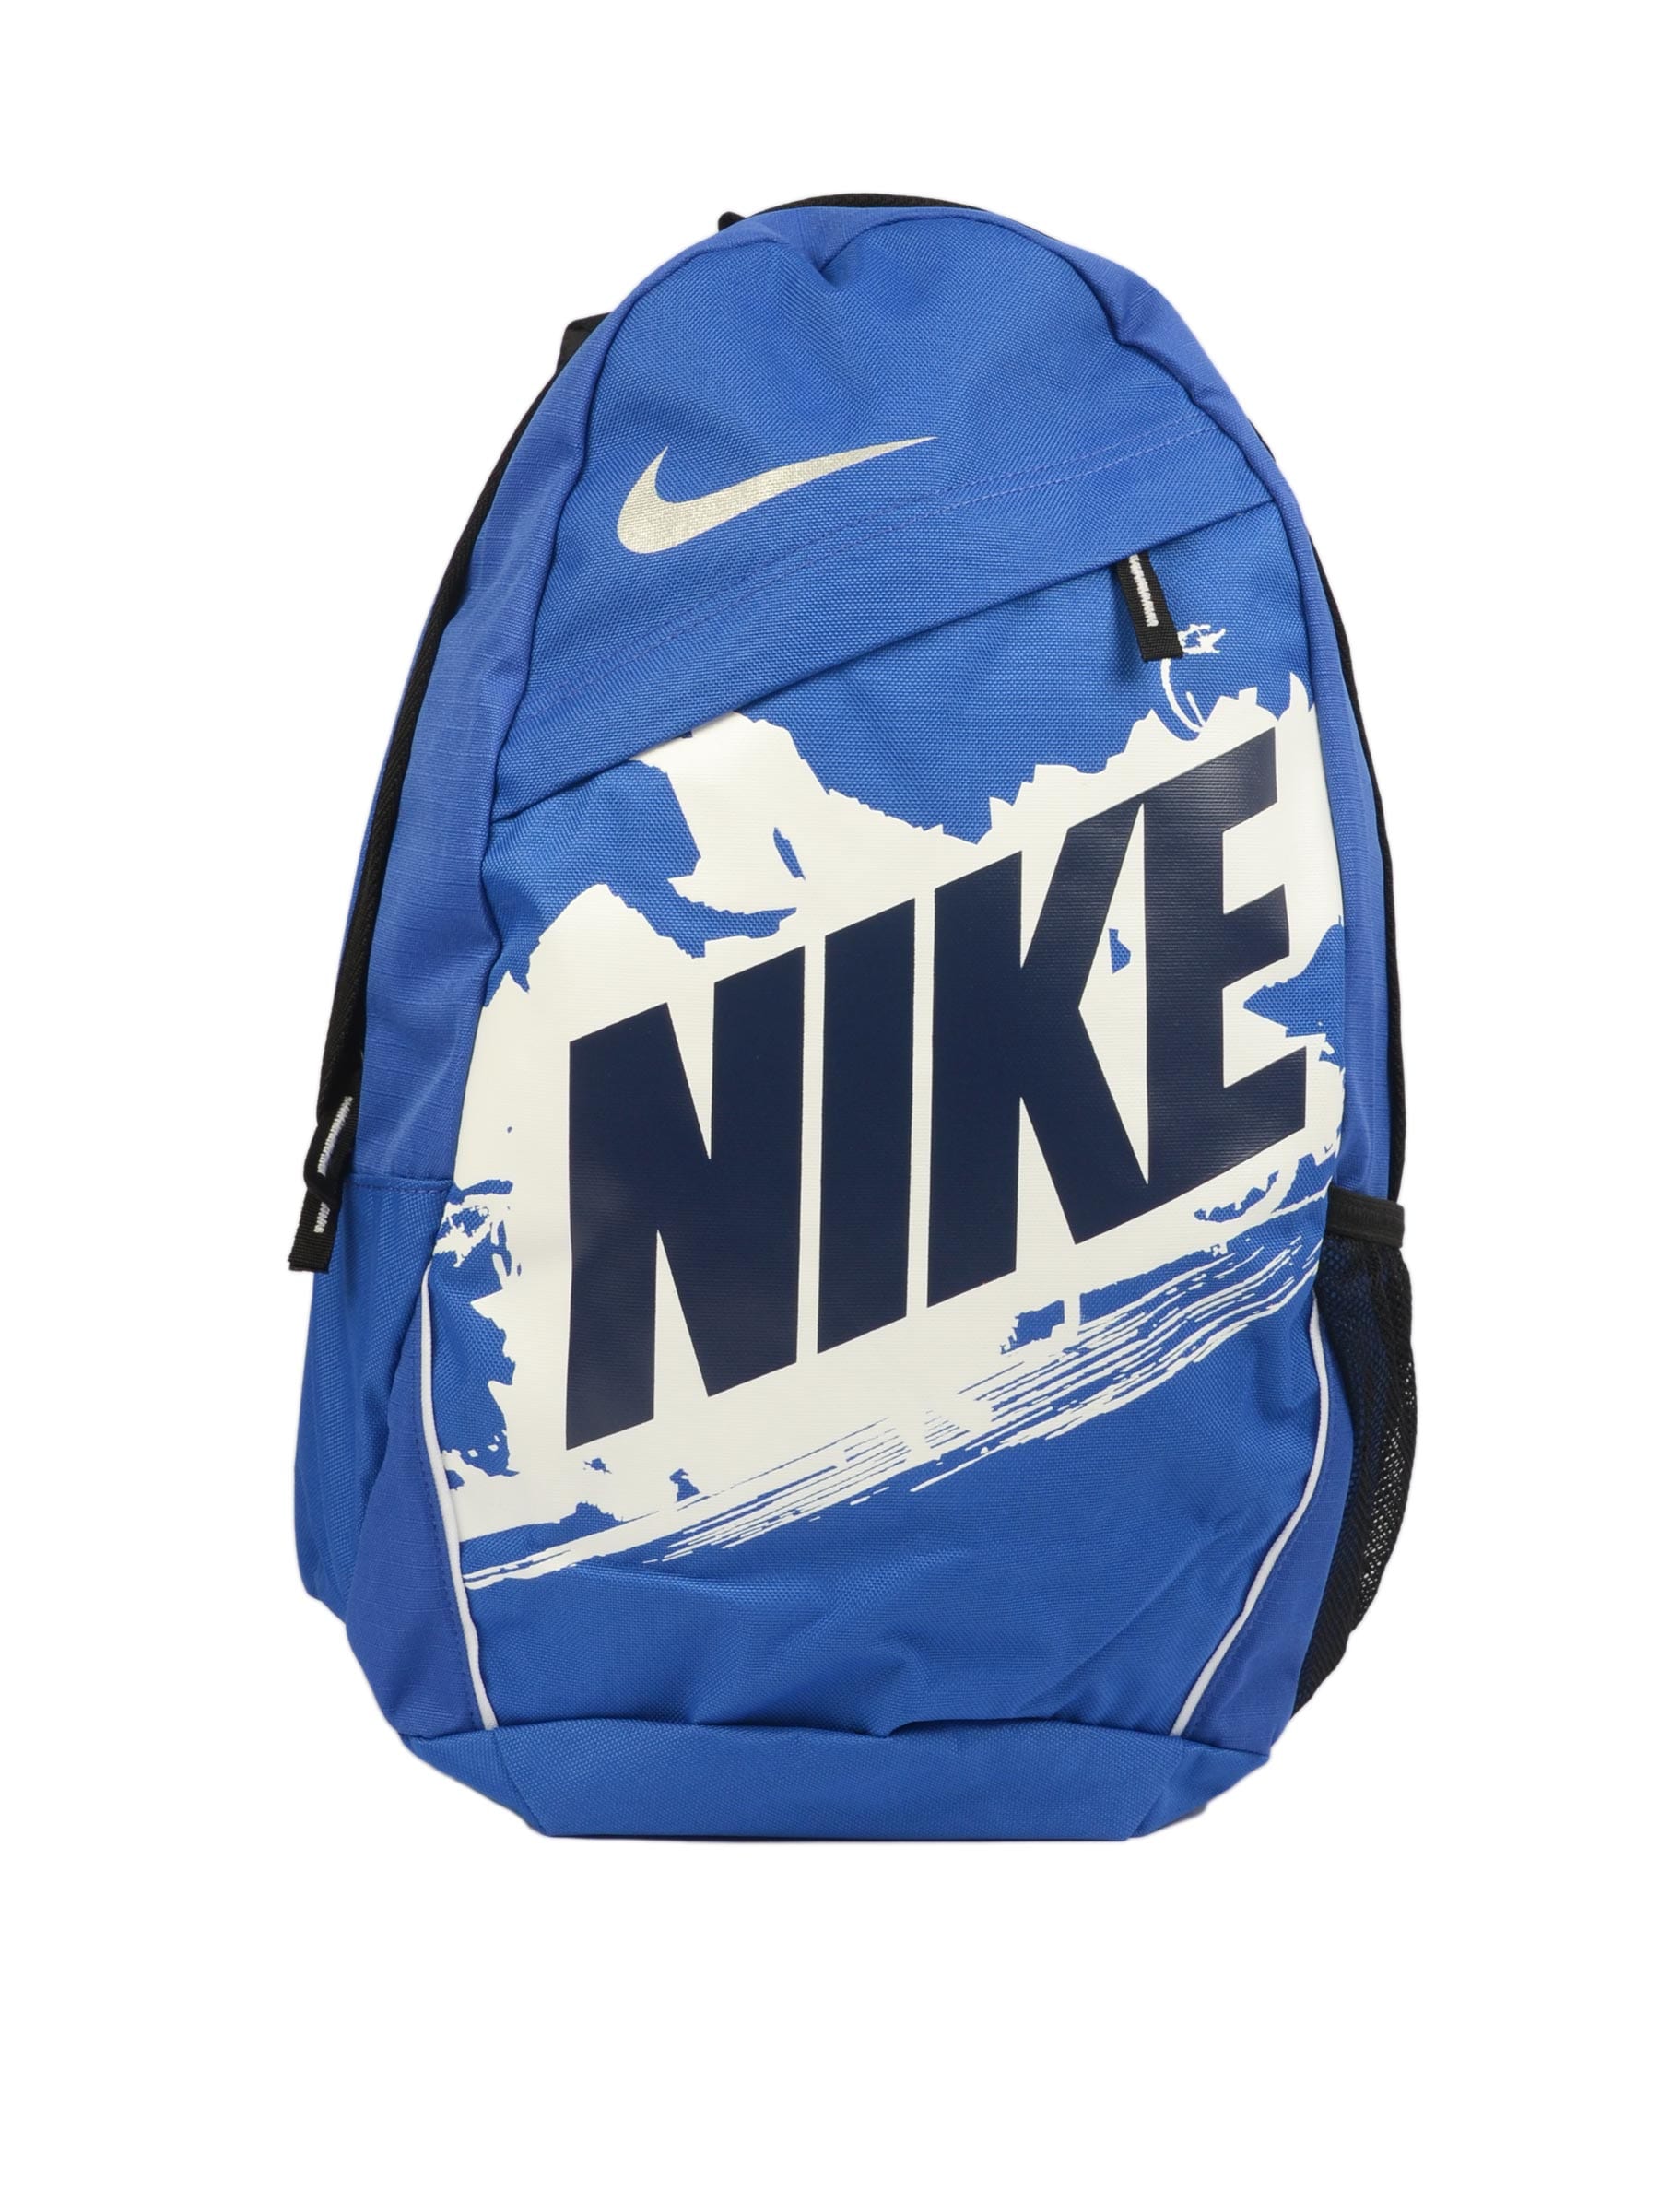 Nike Unisex Classic Blue Black Backpack